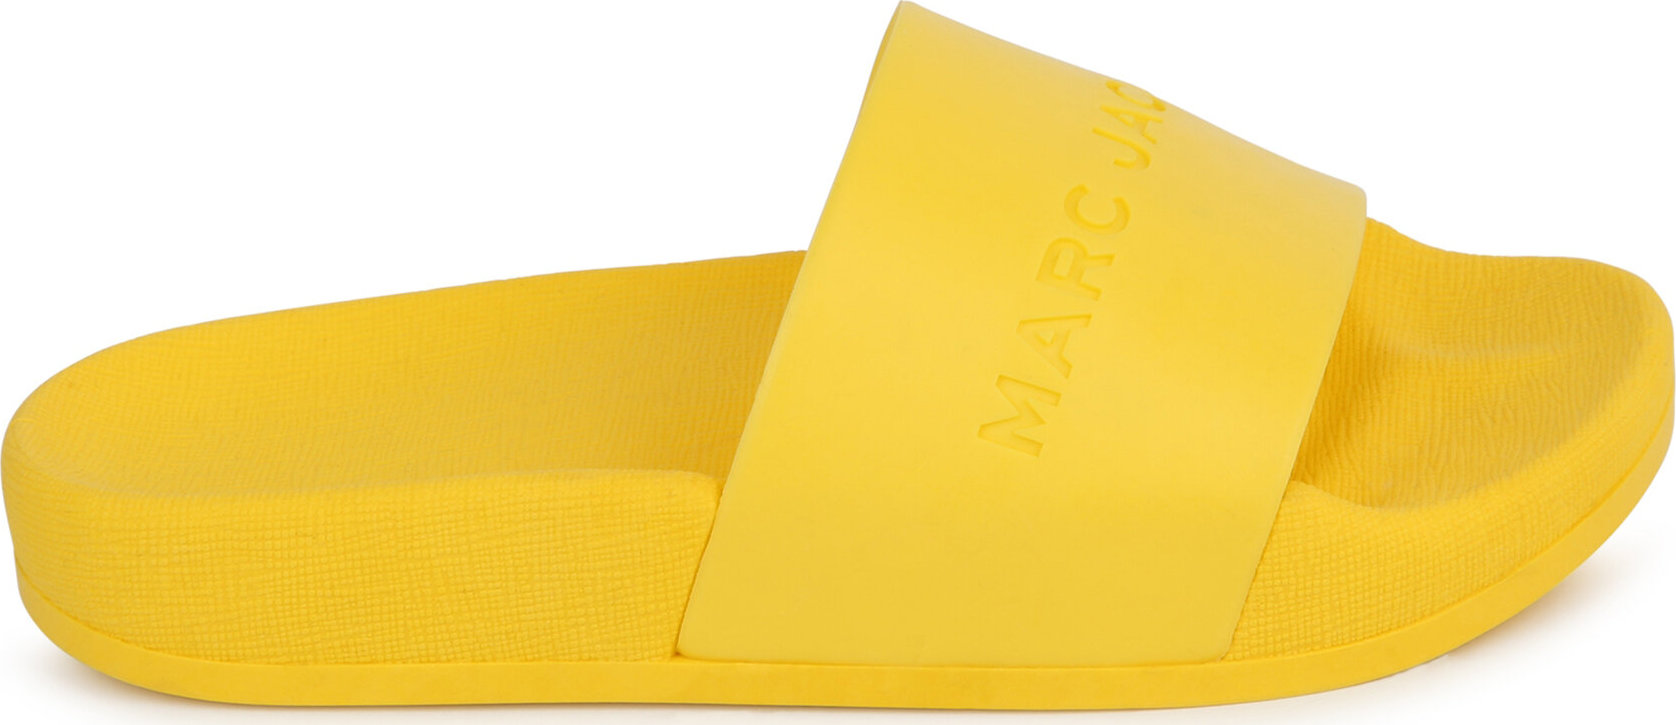 Nazouváky The Marc Jacobs W60130 S Gold Yellow 577